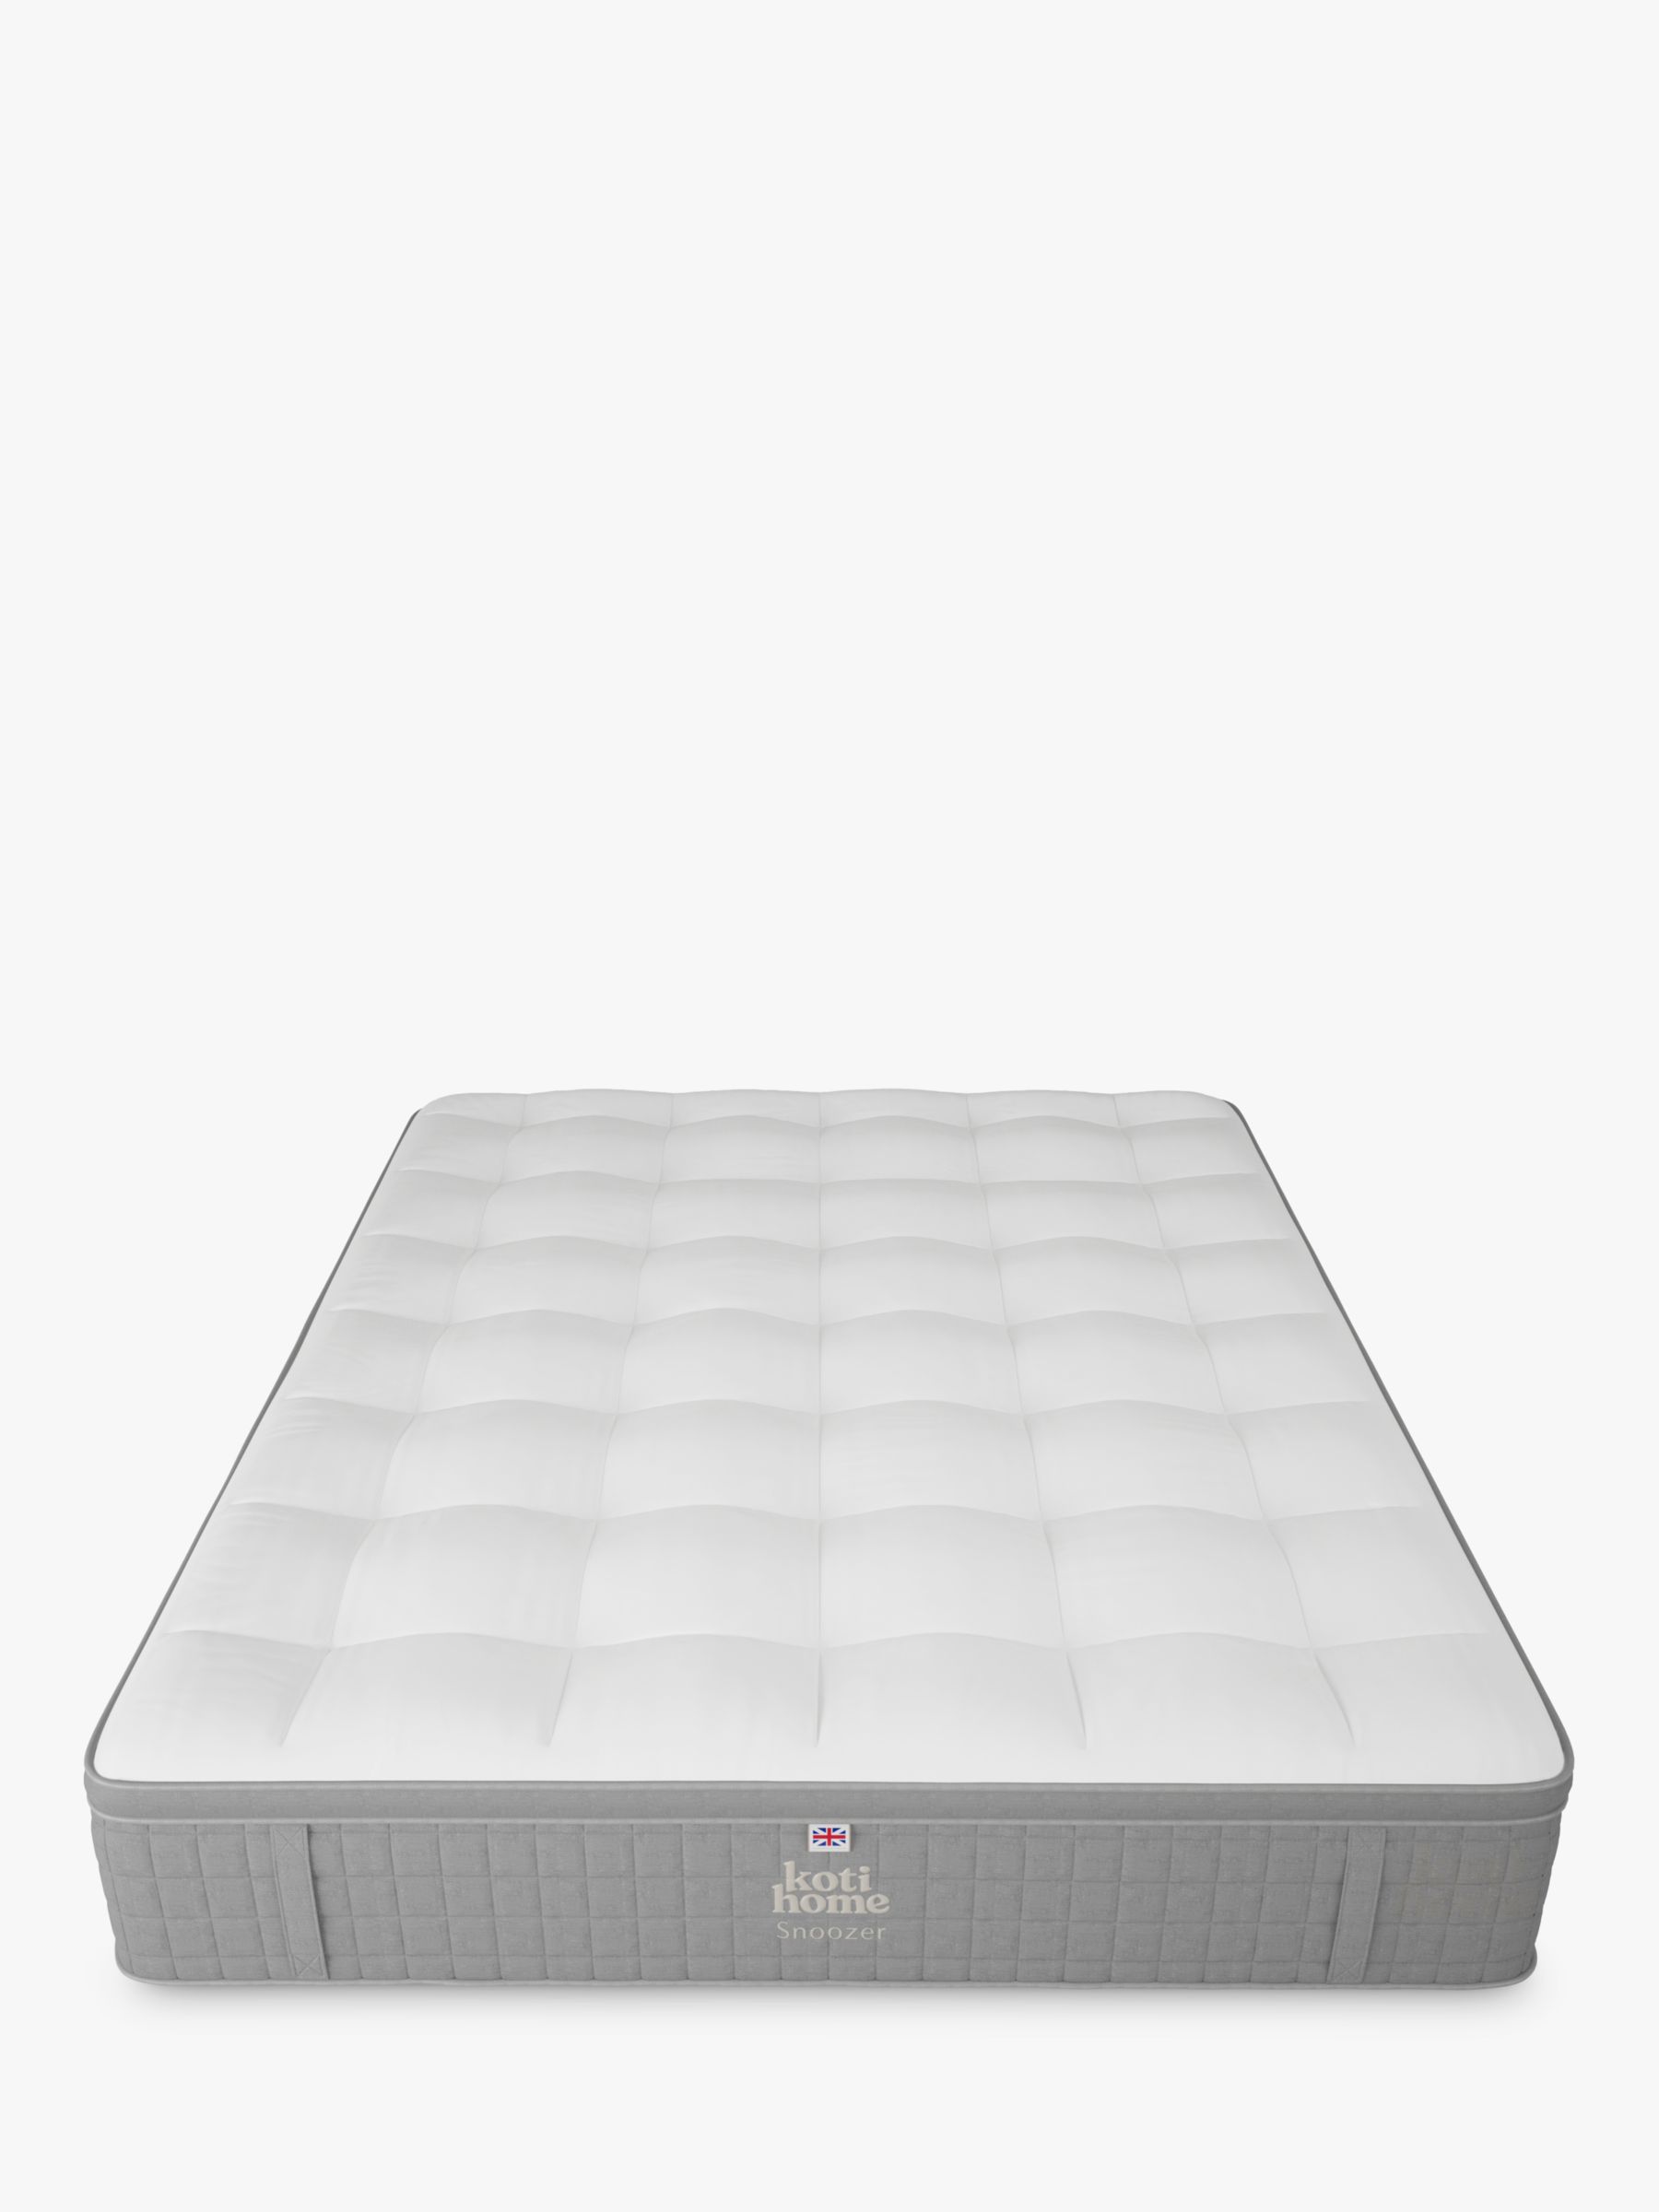 Photo of Koti home snoozer pocket spring mattress medium support king size